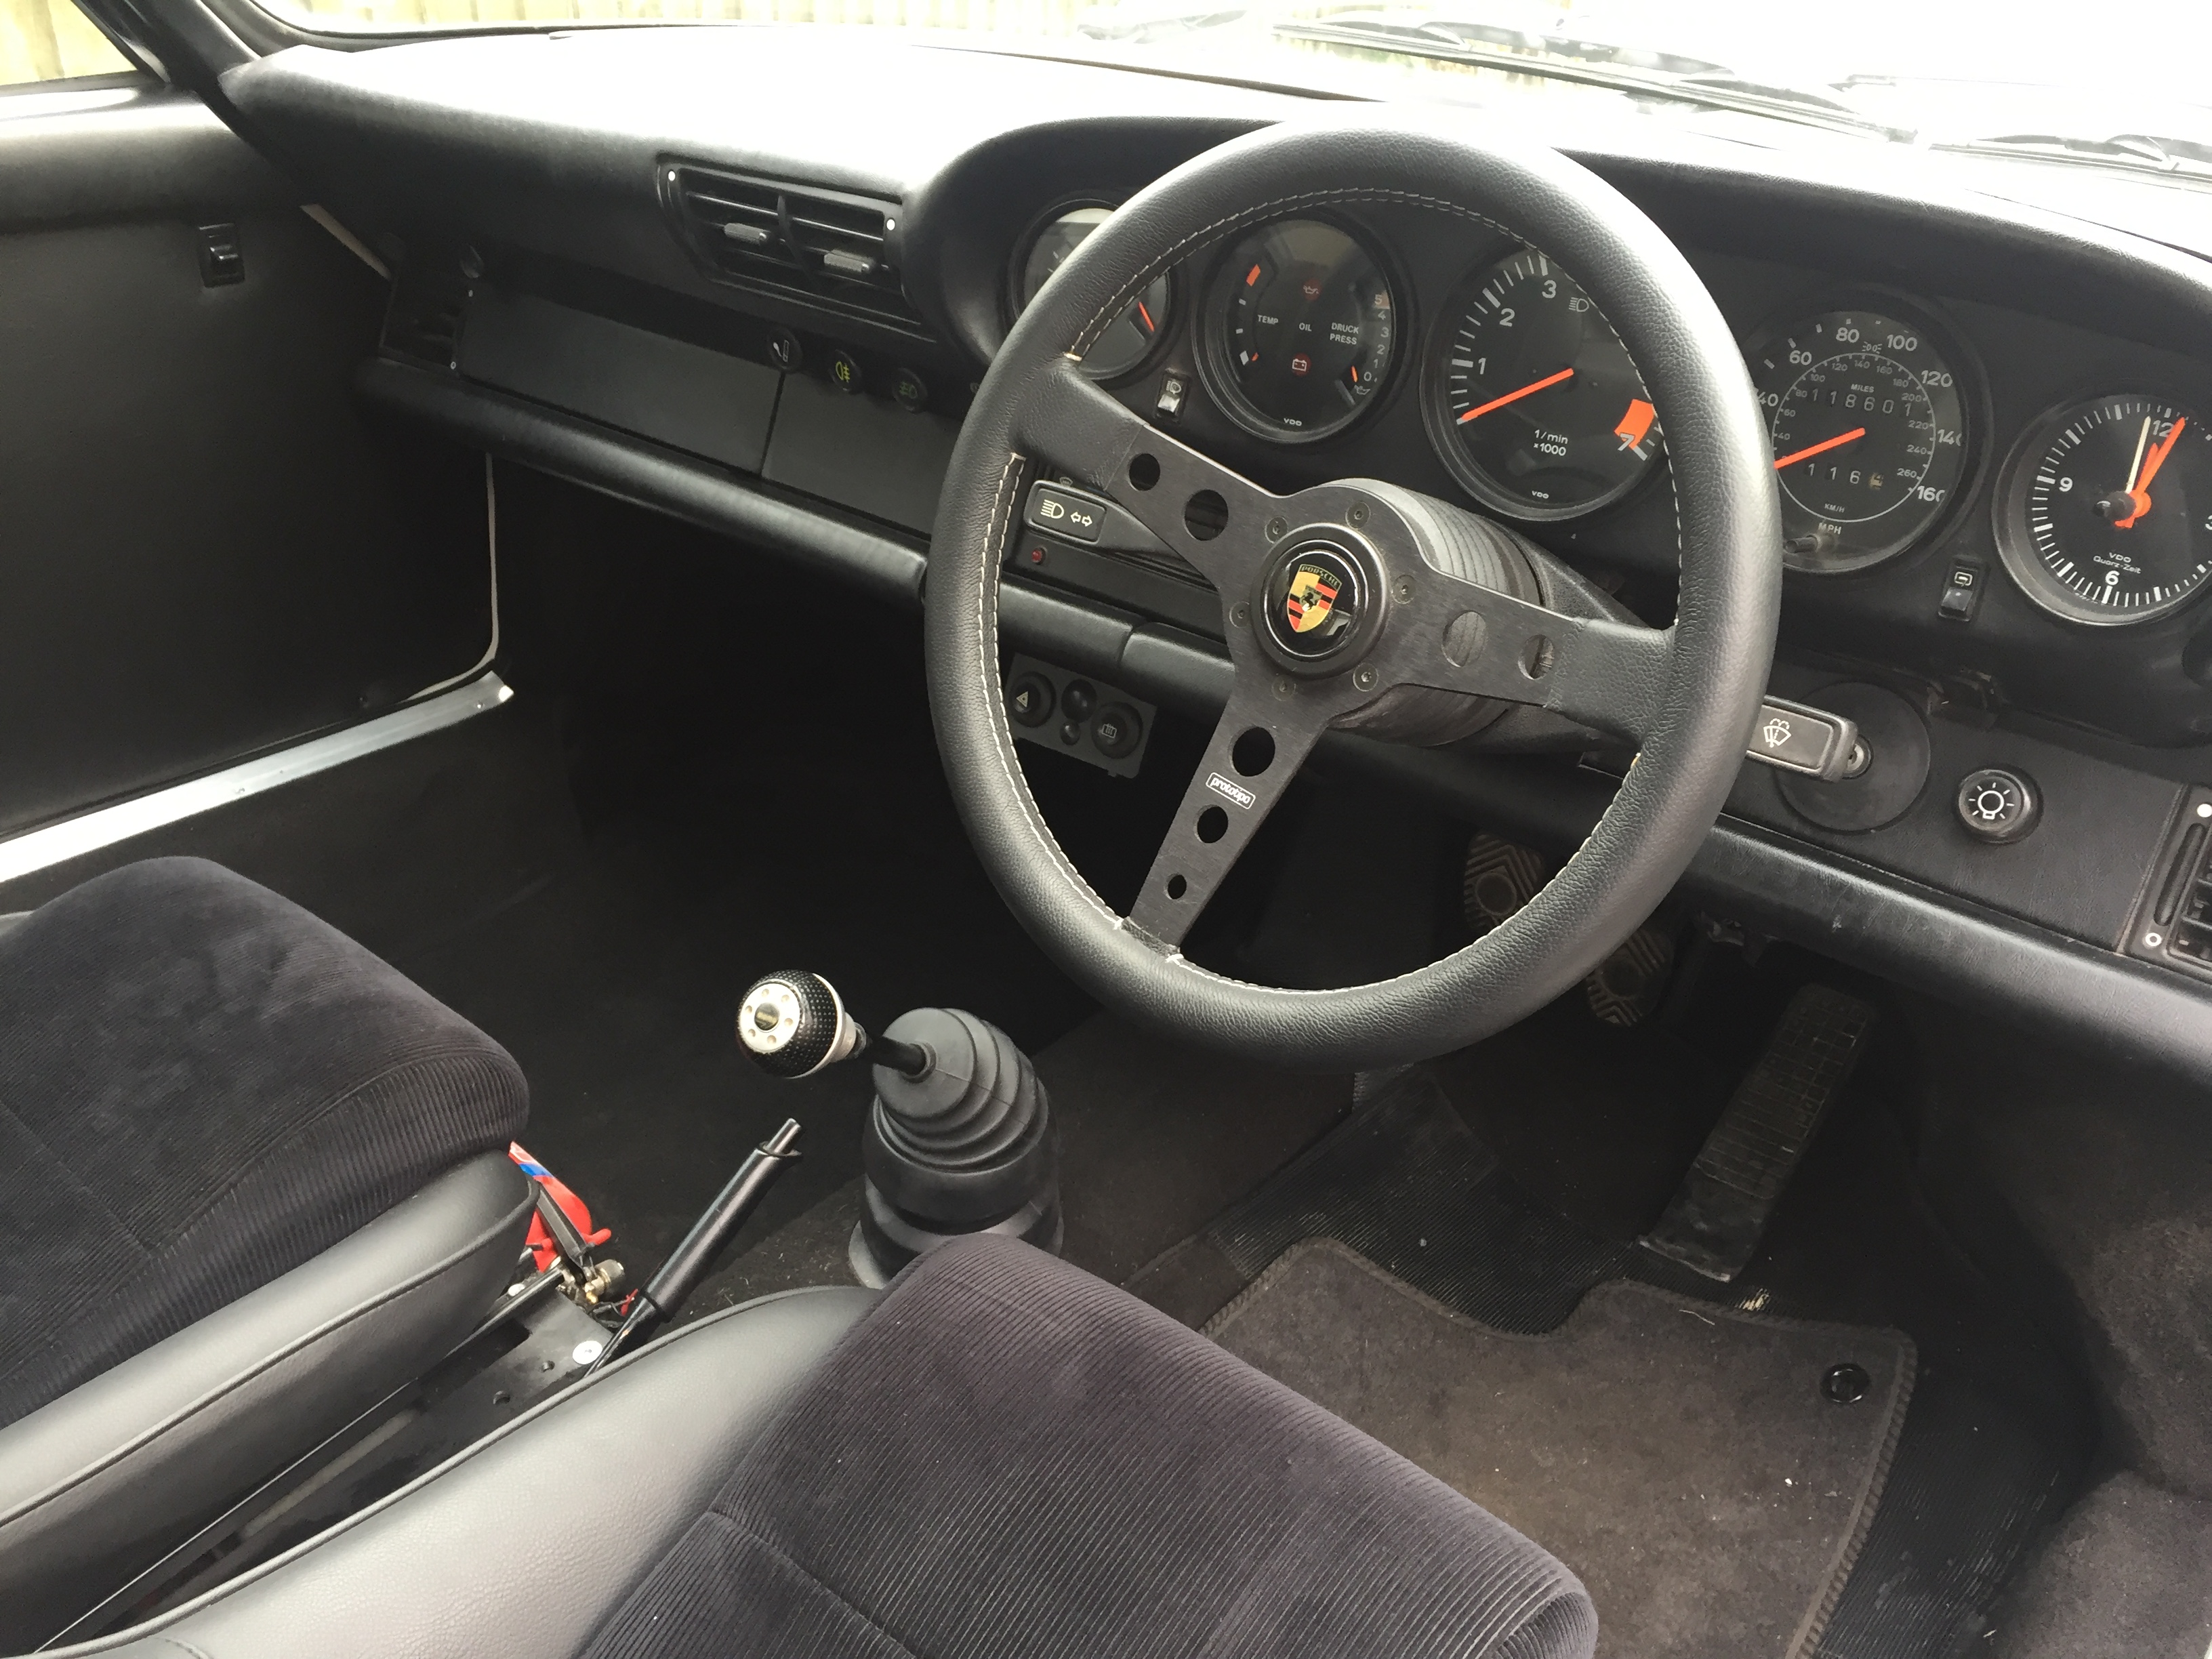 RSR Recreation -Porsche 911 Carrera 2.7, Pro 9 Build based on a 1986 Porsche 911 - Wide Body. - Image 17 of 21